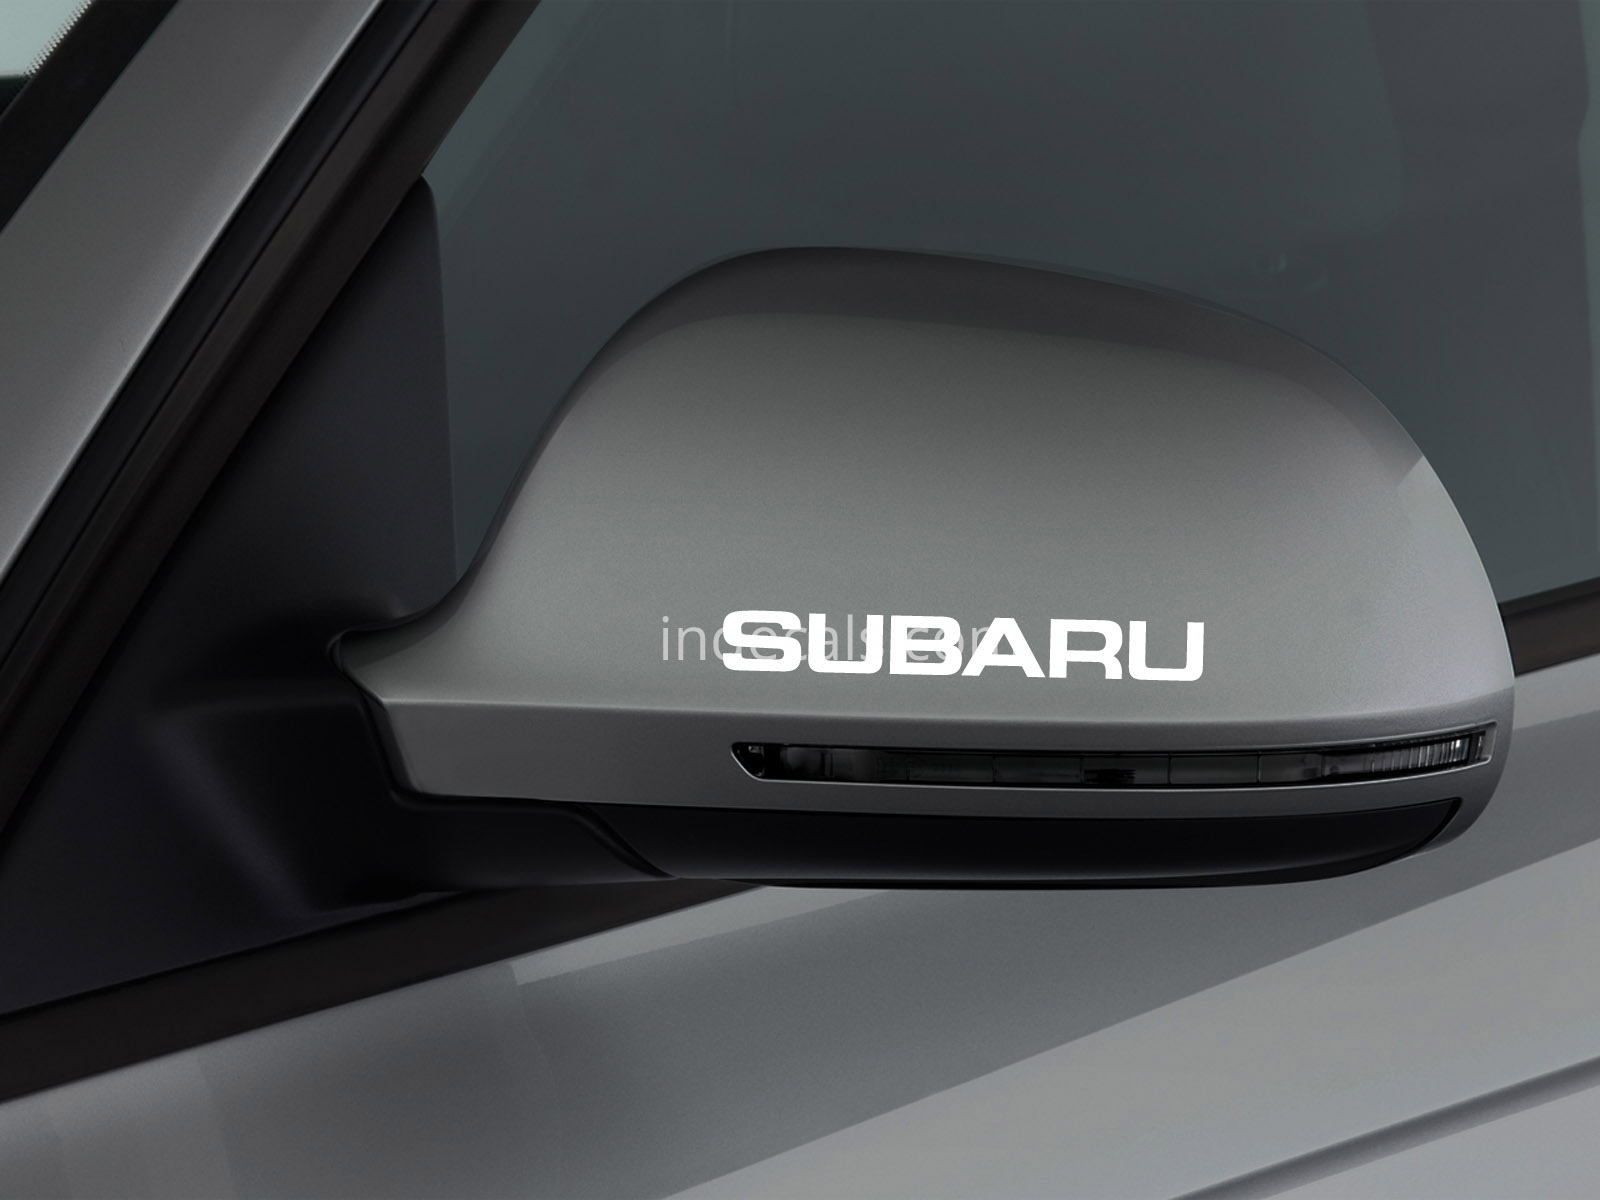 3 x Subaru Stickers for Mirror - White